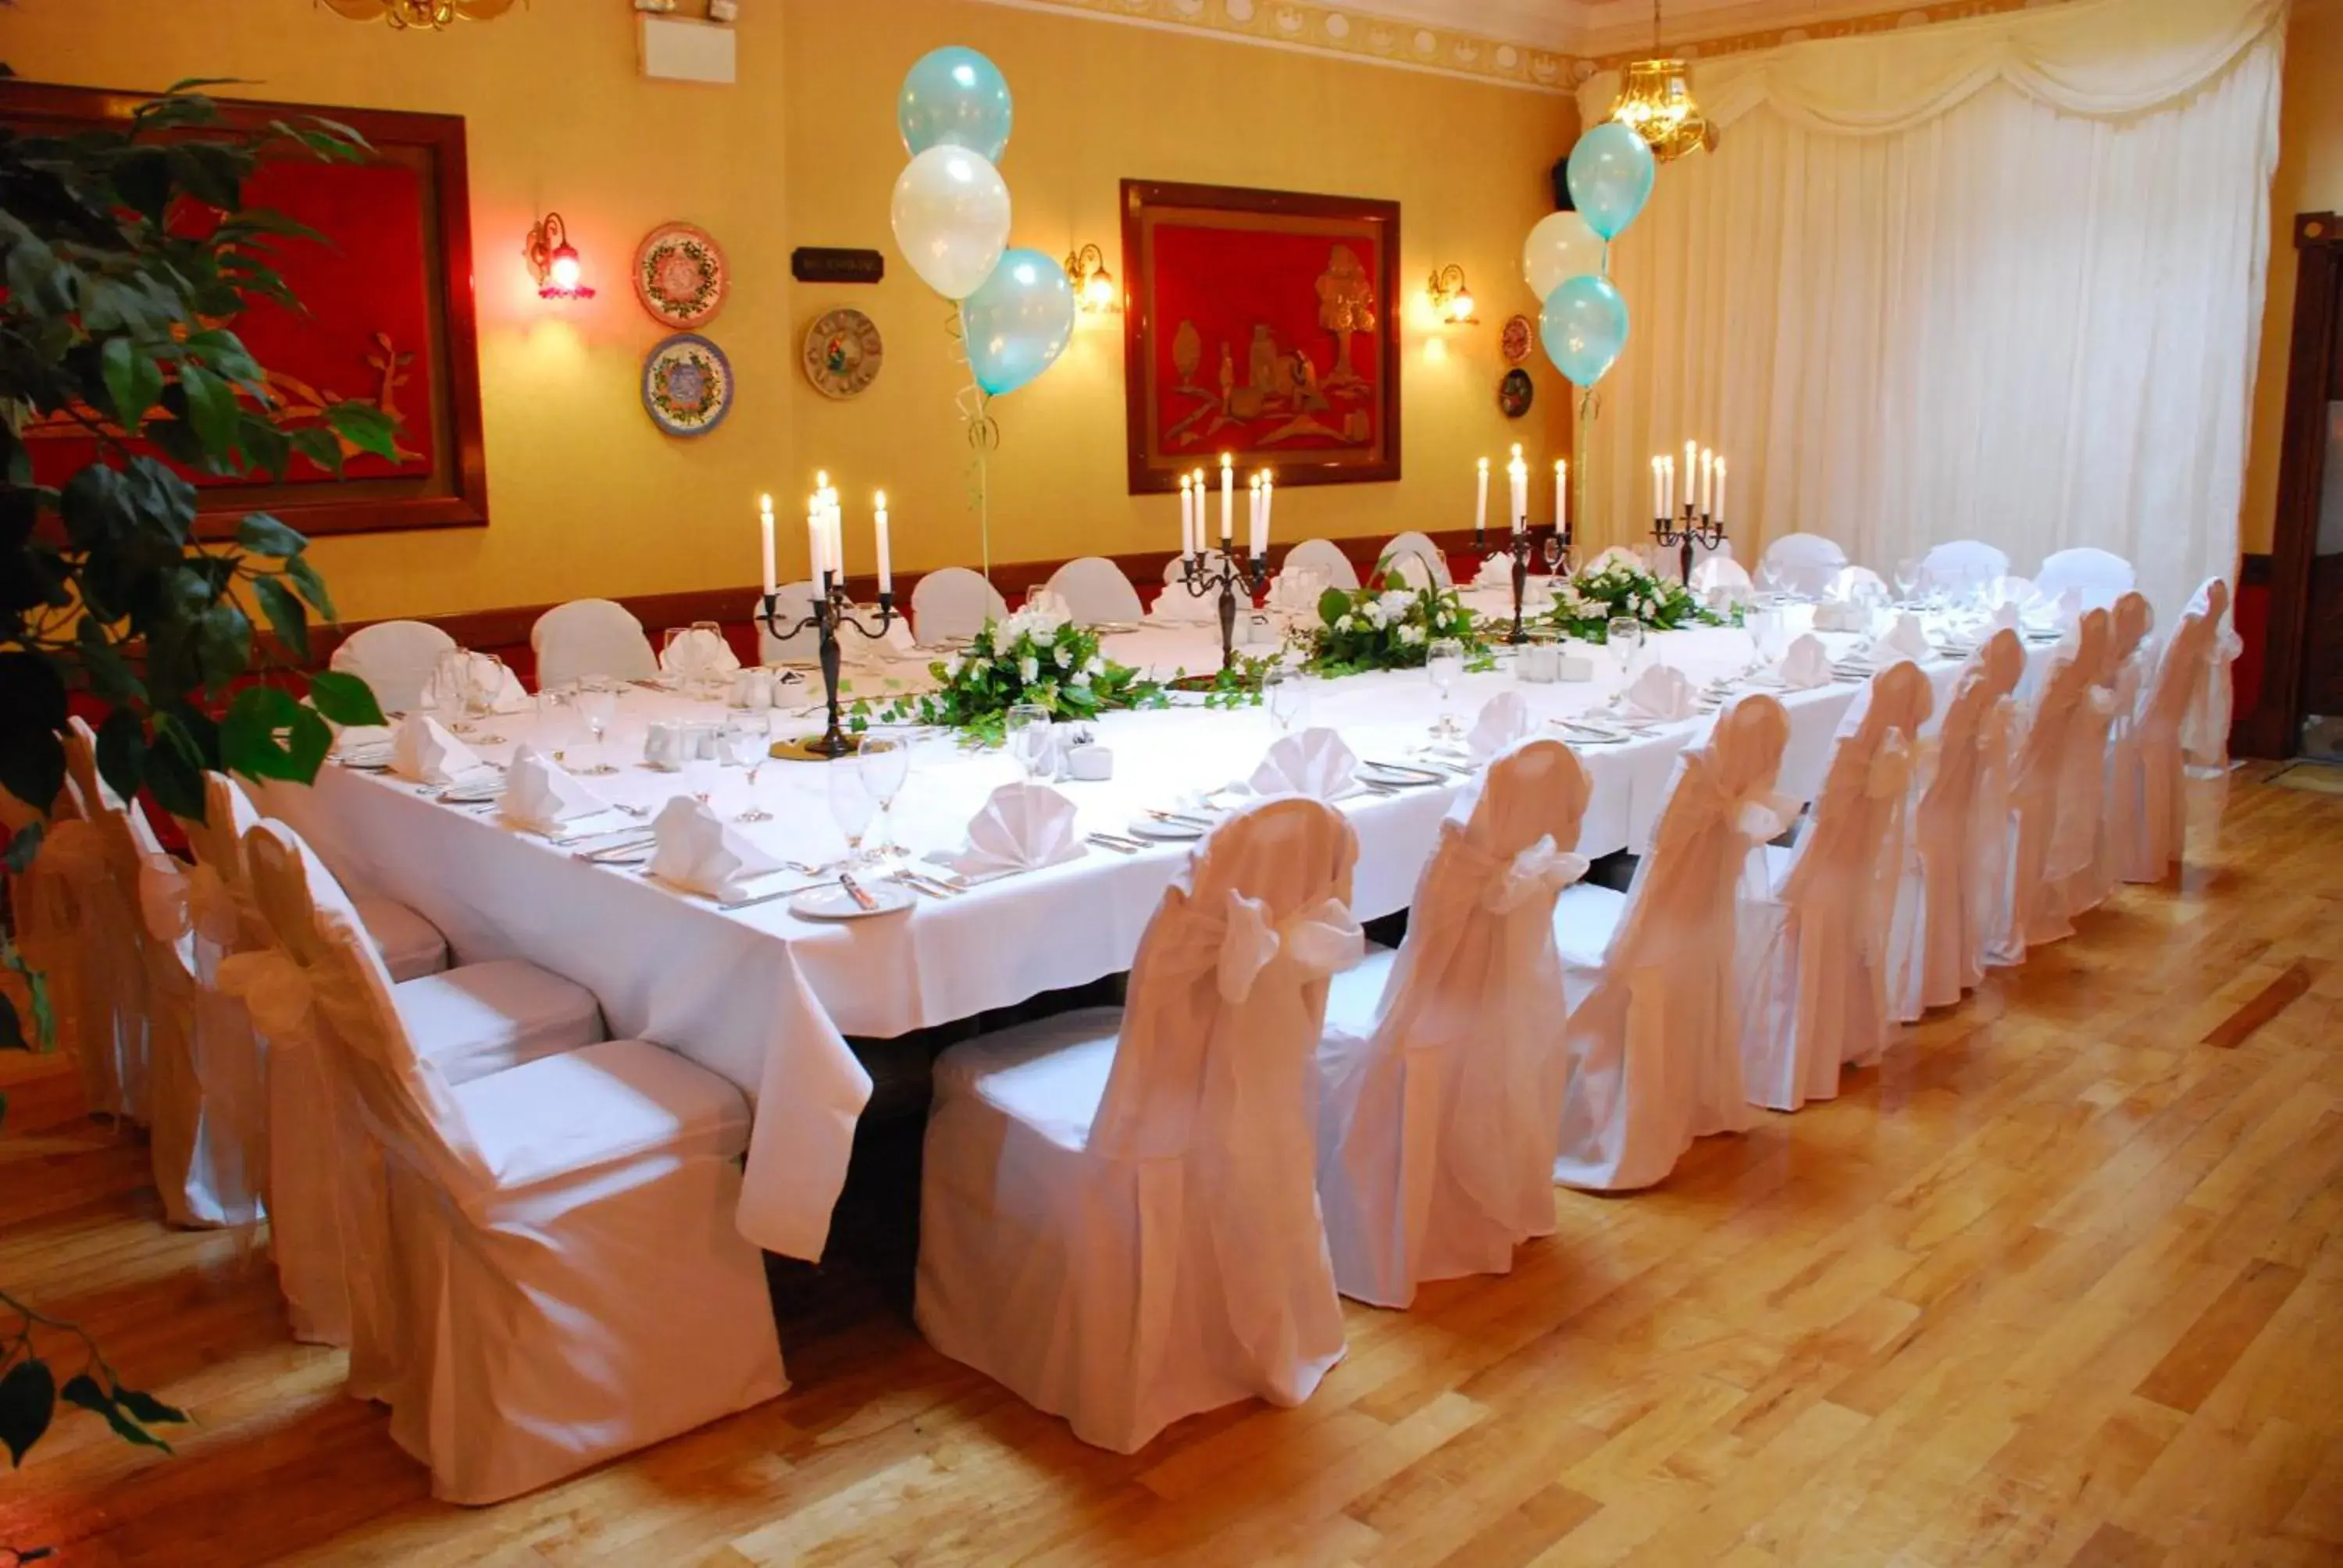 Banquet/Function facilities, Banquet Facilities in O'Shea's Hotel